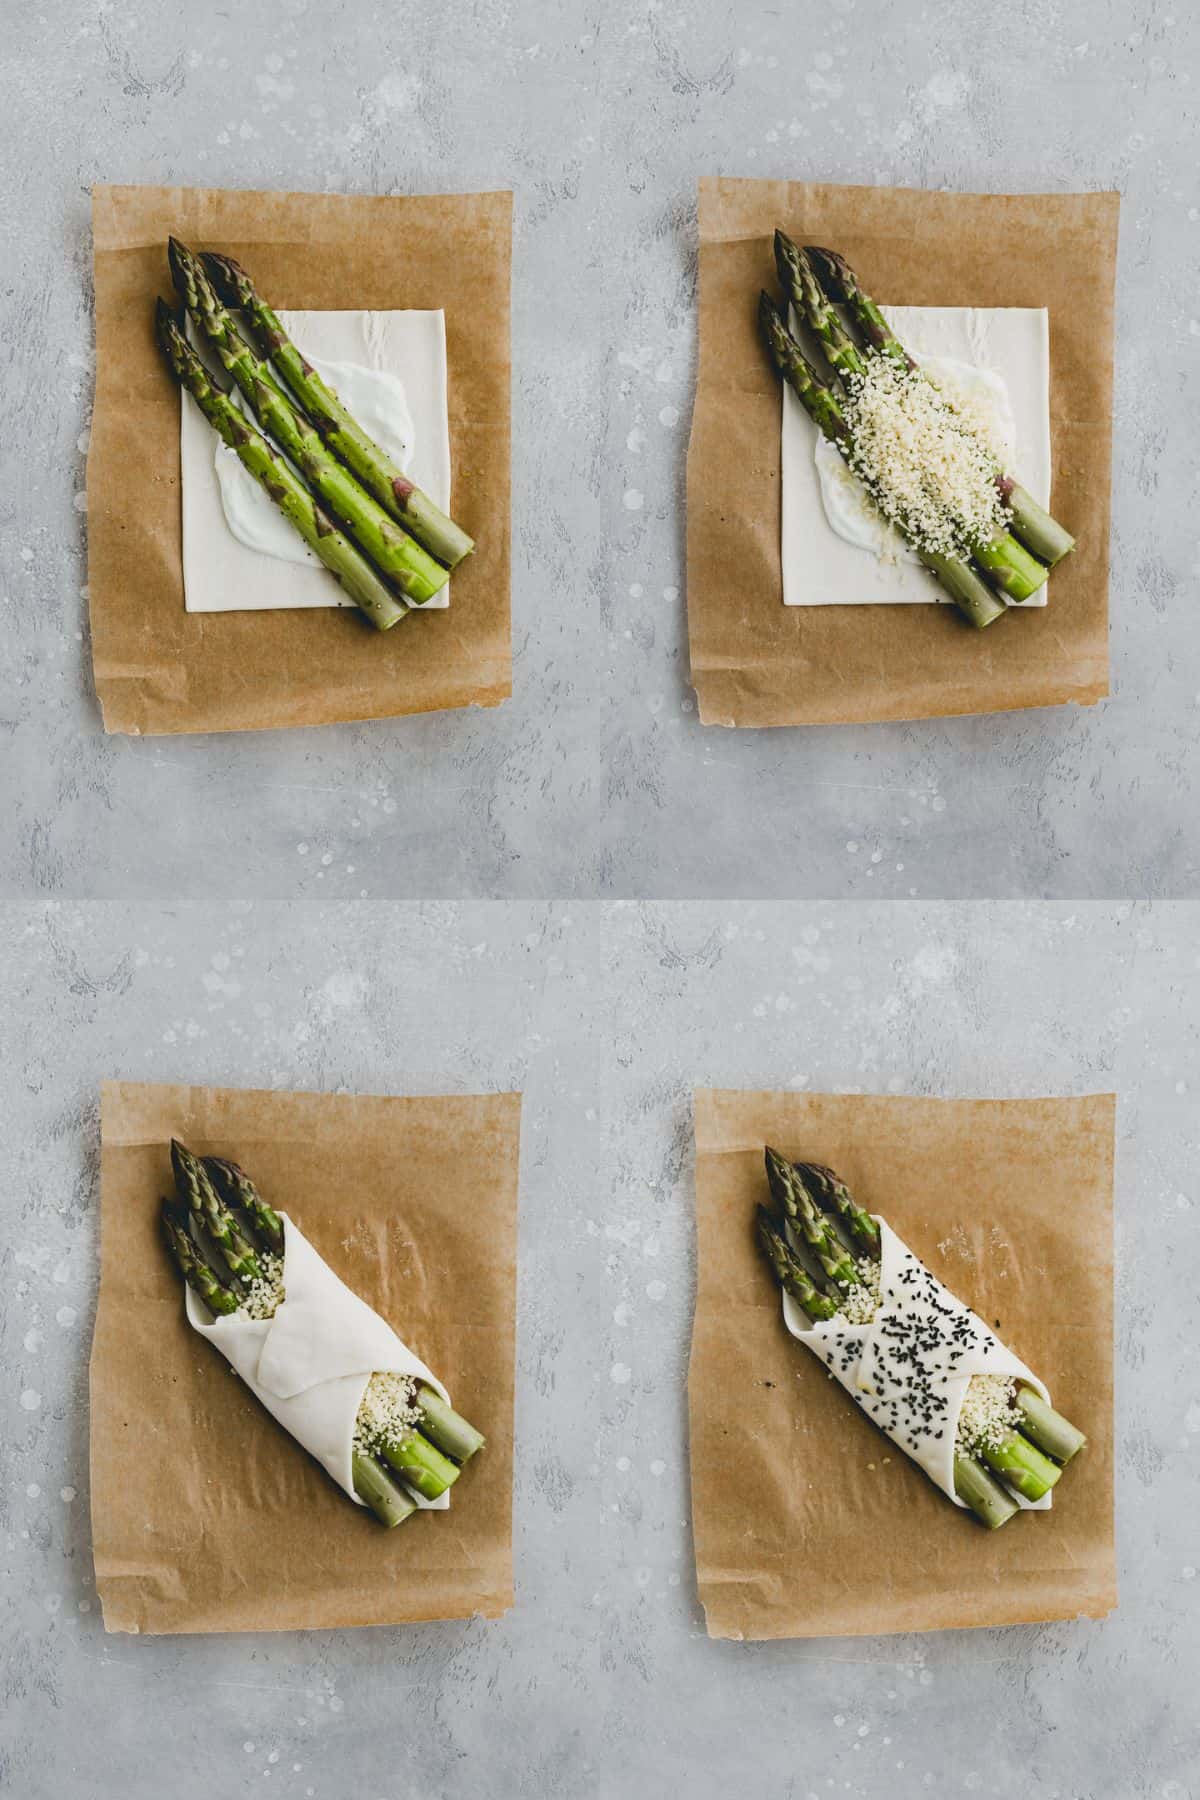 Asparagus Puff Pastry Bundles Recipe Step 4-7